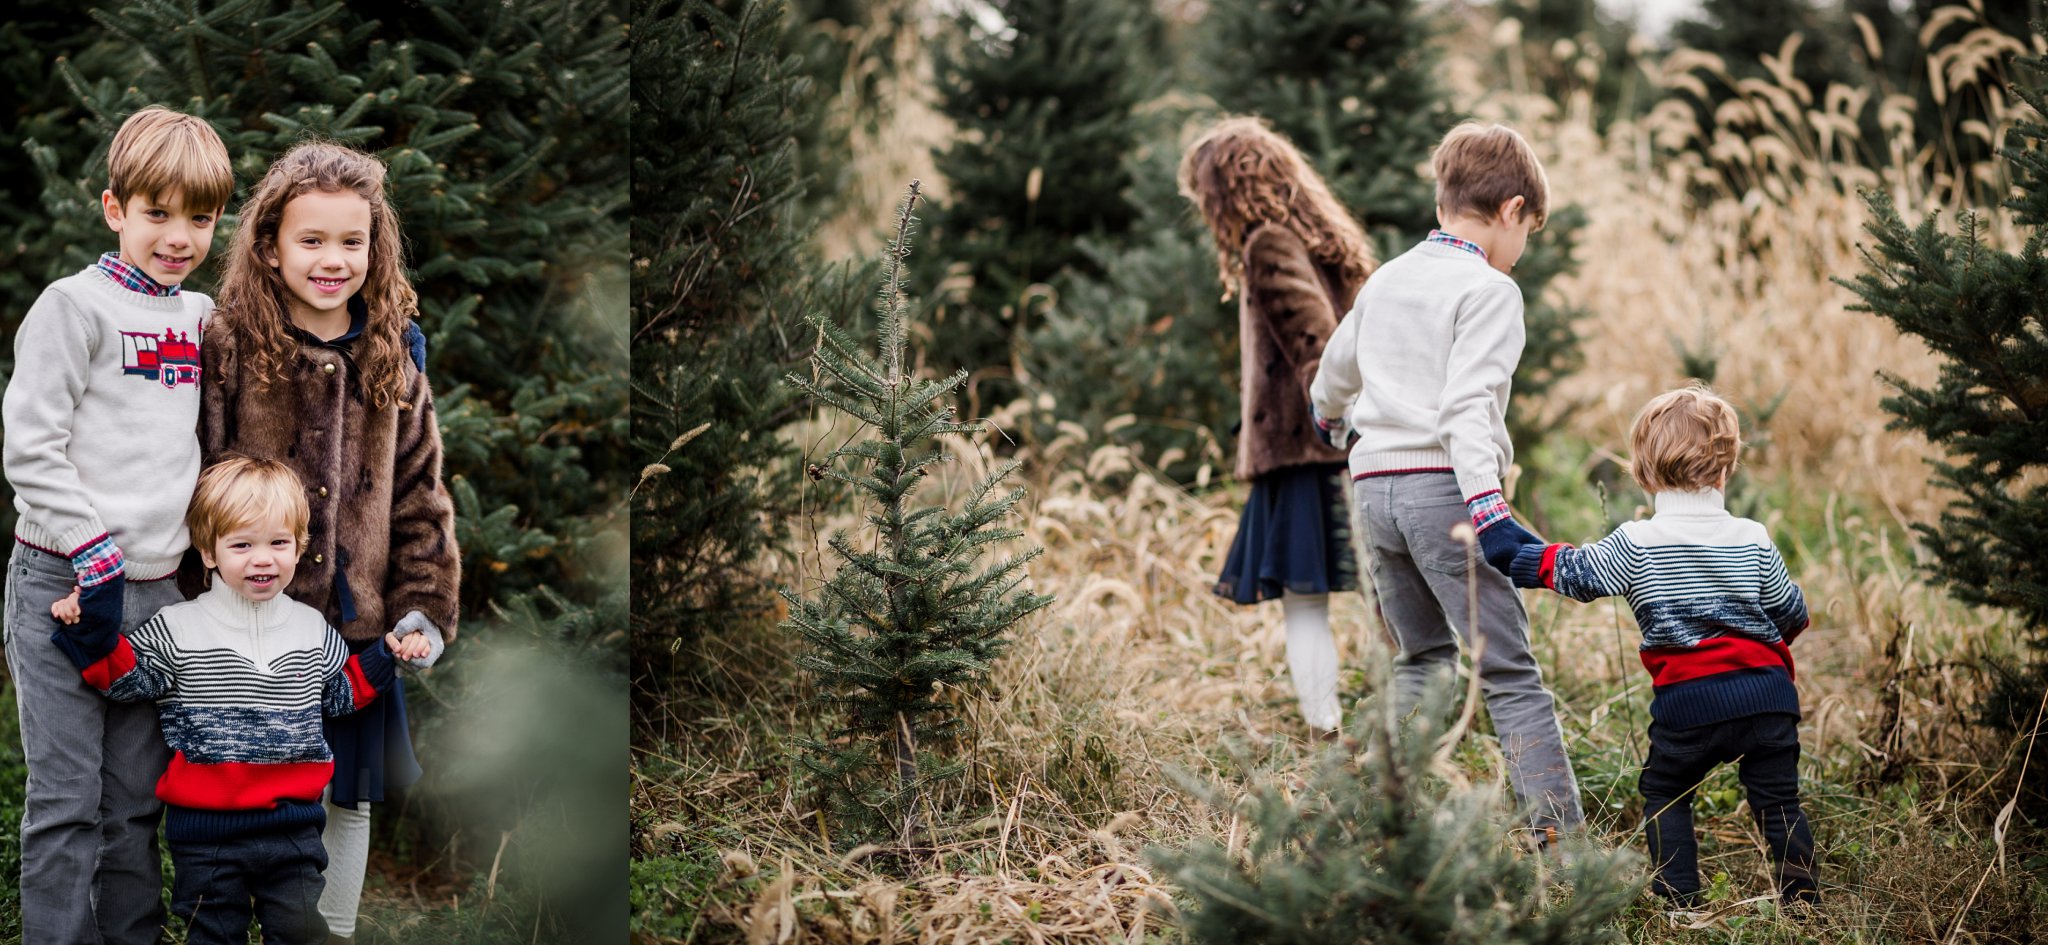 Christmas Tree Farm Holiday Mini Sessions | Tonya Teran Photography, Germantown, MD Newborn, Baby, and Family Photographer